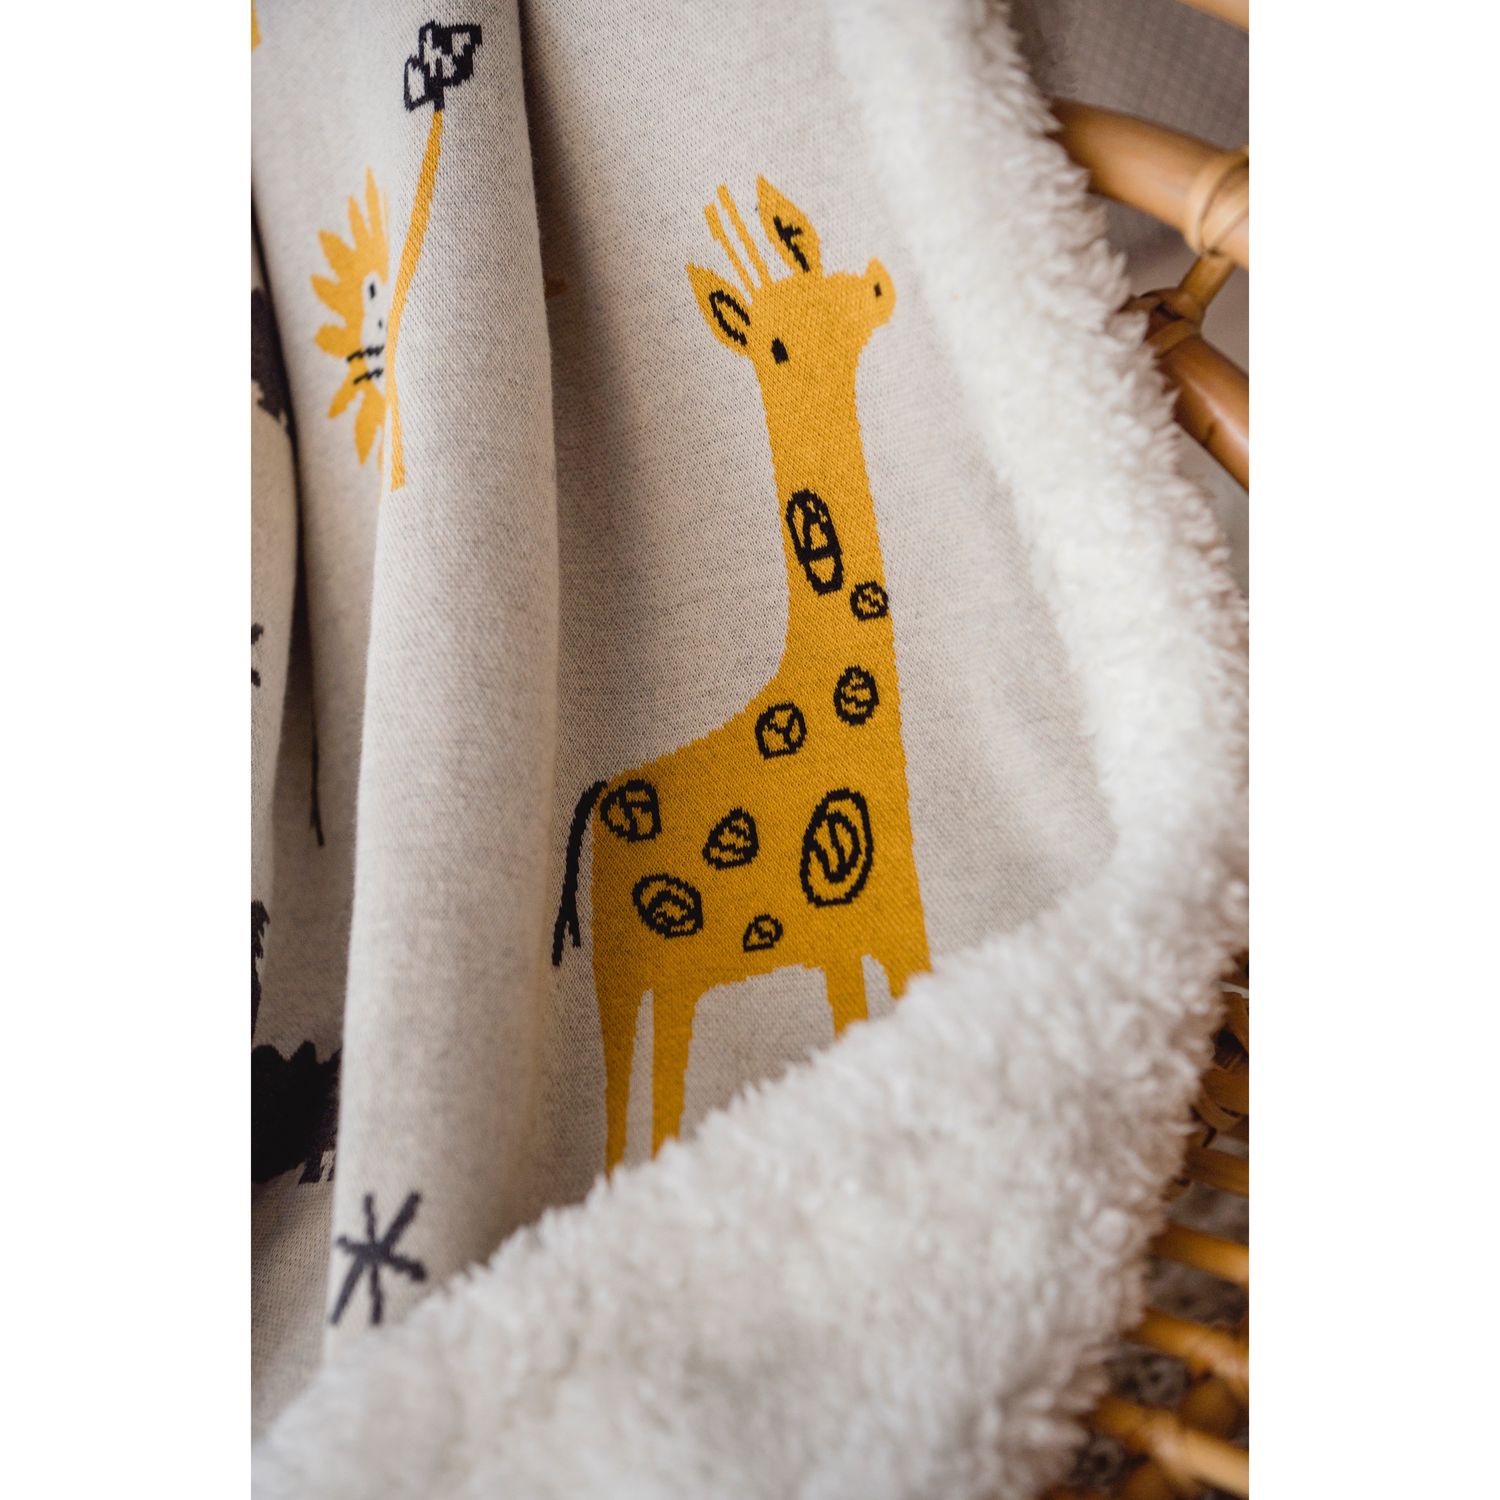 Детское одеяло Kaiser Зоо зима, 100х80 см, бело-серое (65219) - фото 8